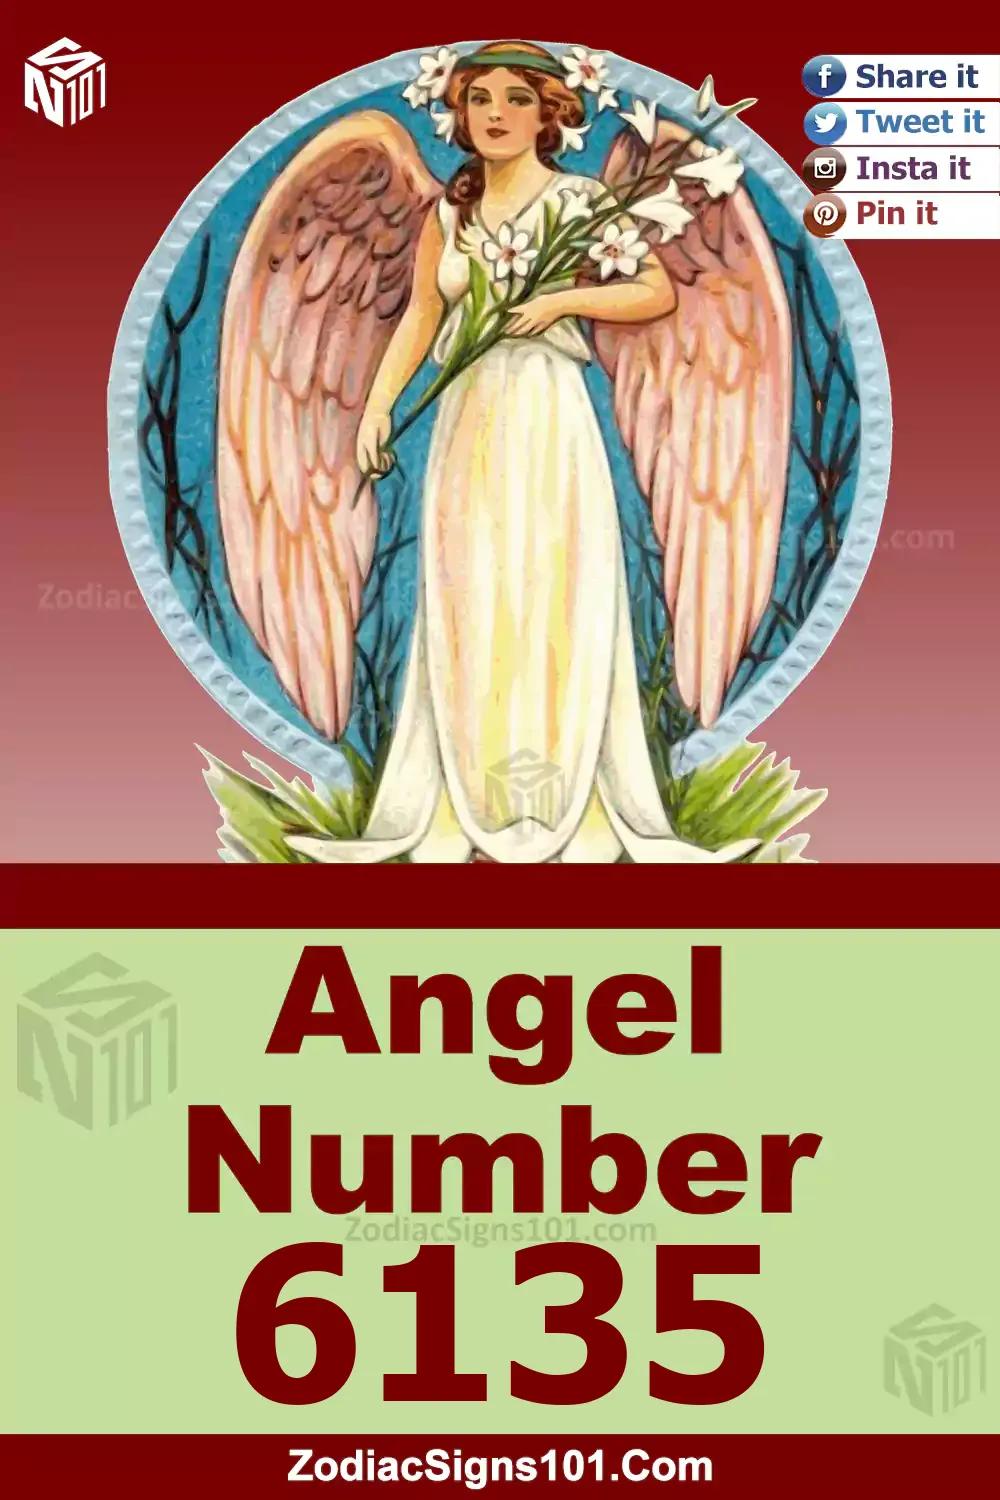 6135-Angel-Number-Meaning.jpg